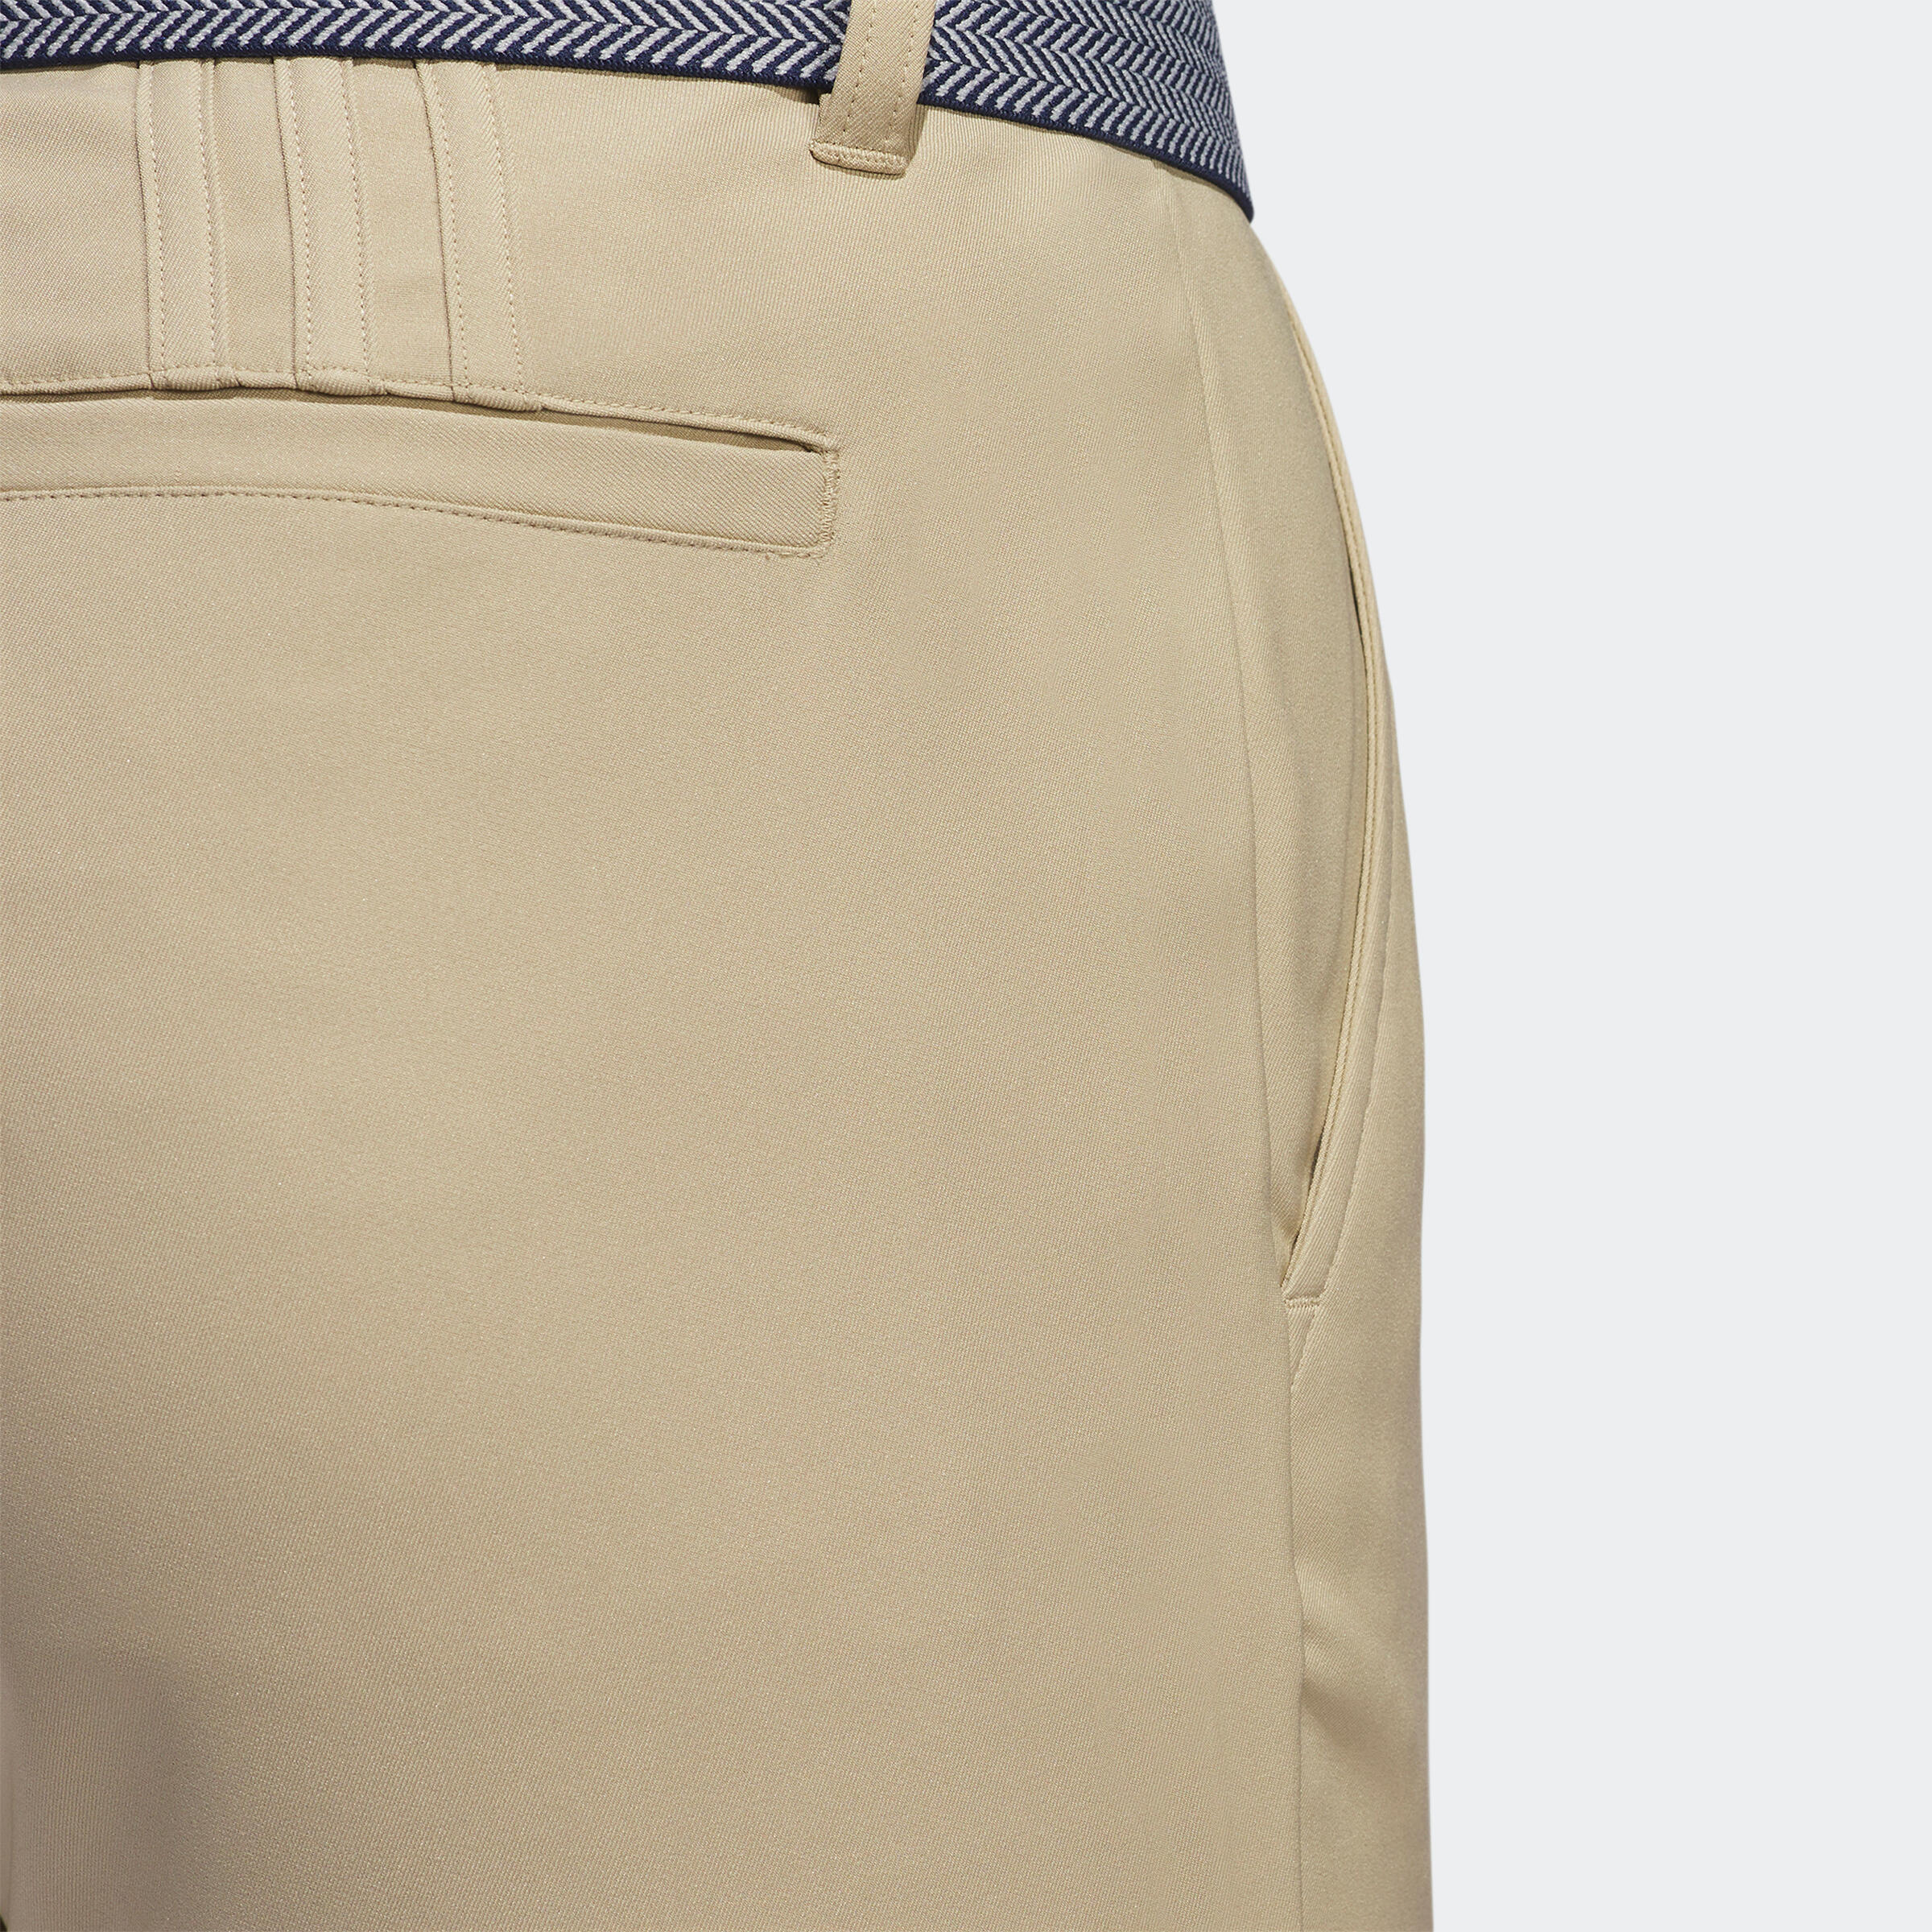 Men's golf trousers - Adidas beige 3/4